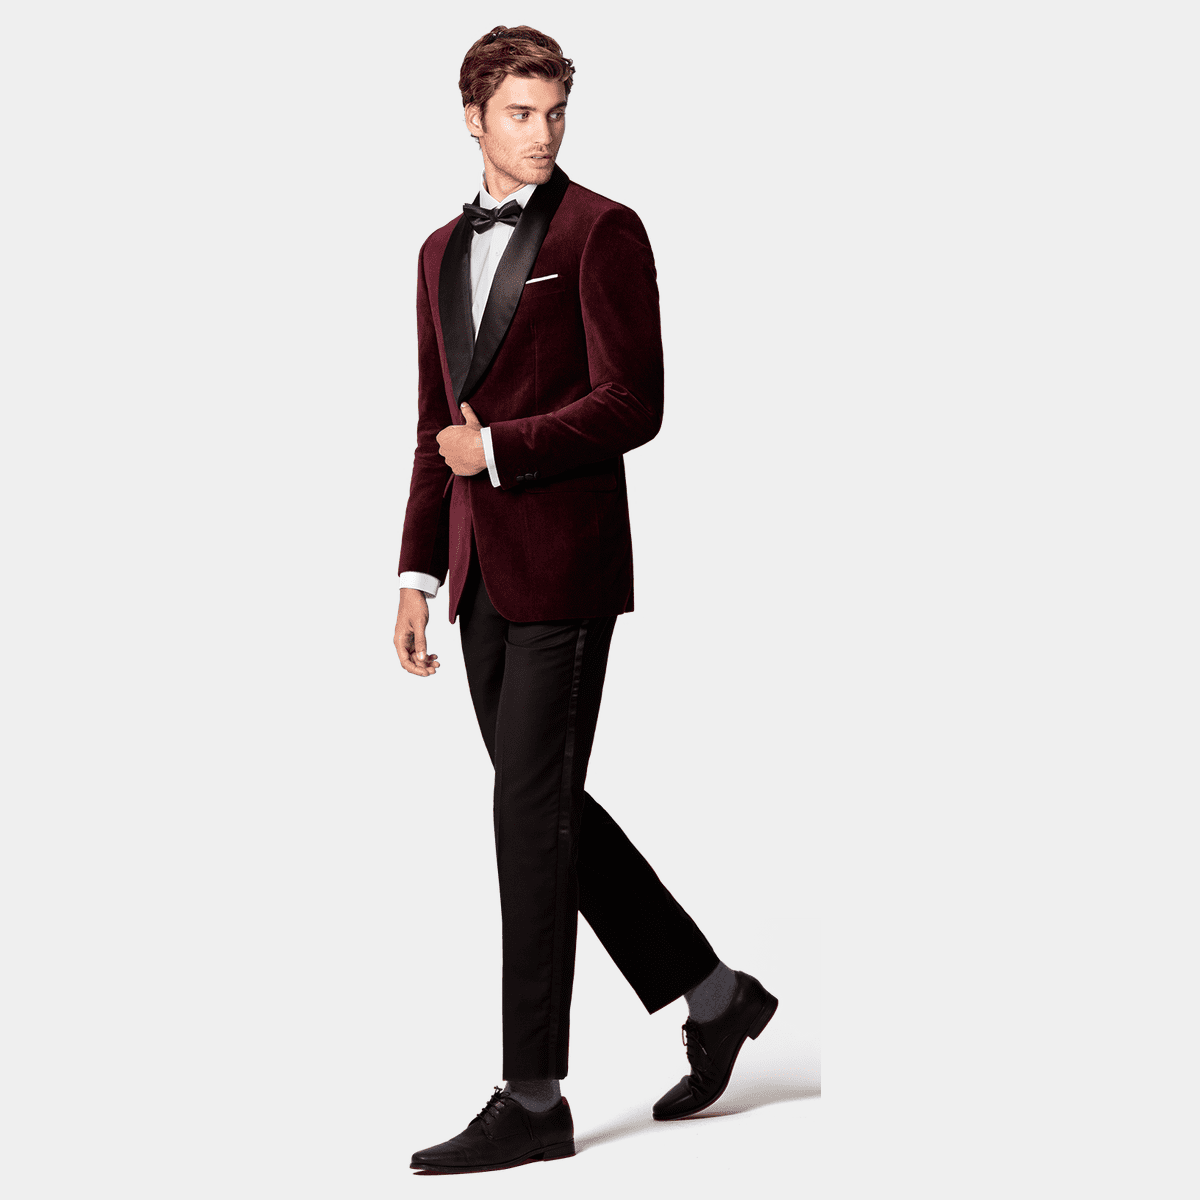 Men Suit Burgundy Formal Business Groom Tuxedo Wedding Prom Party Slim Fit  Suit | eBay